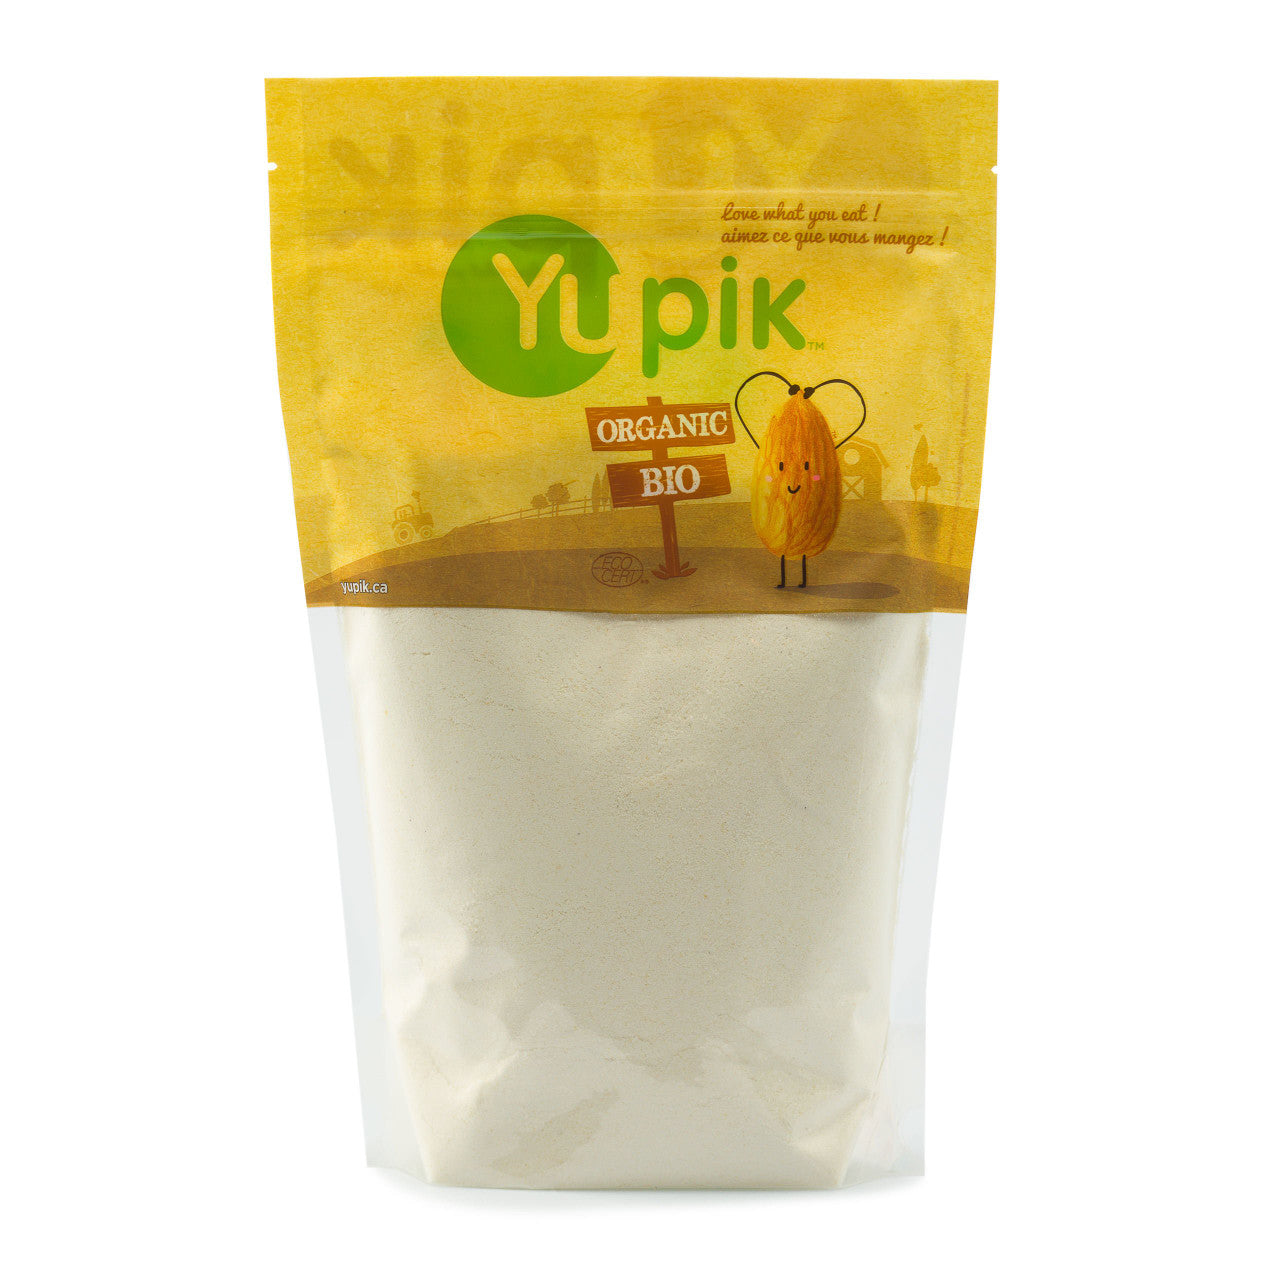 Yupik Organic Coconut Flour, 1Kg/2.2lbs. {Imported from Canada}